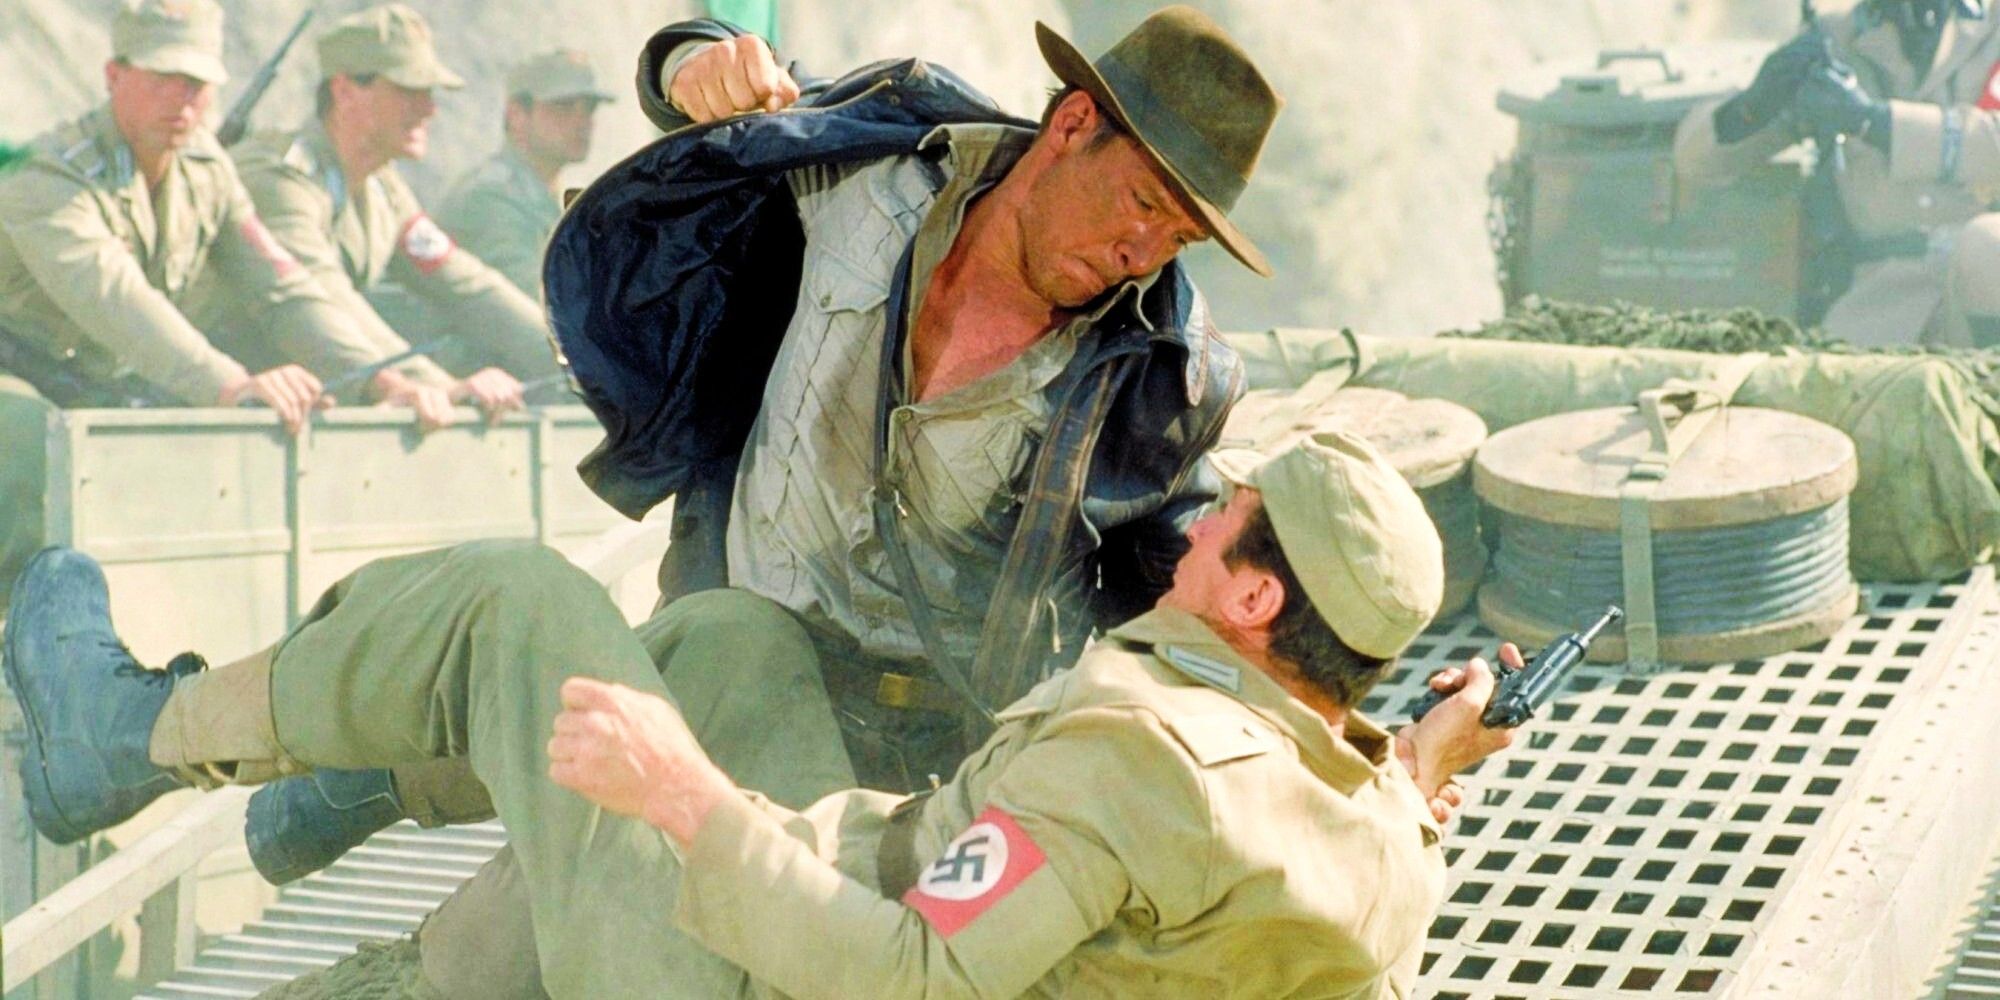 Indiana Jones socando um nazista